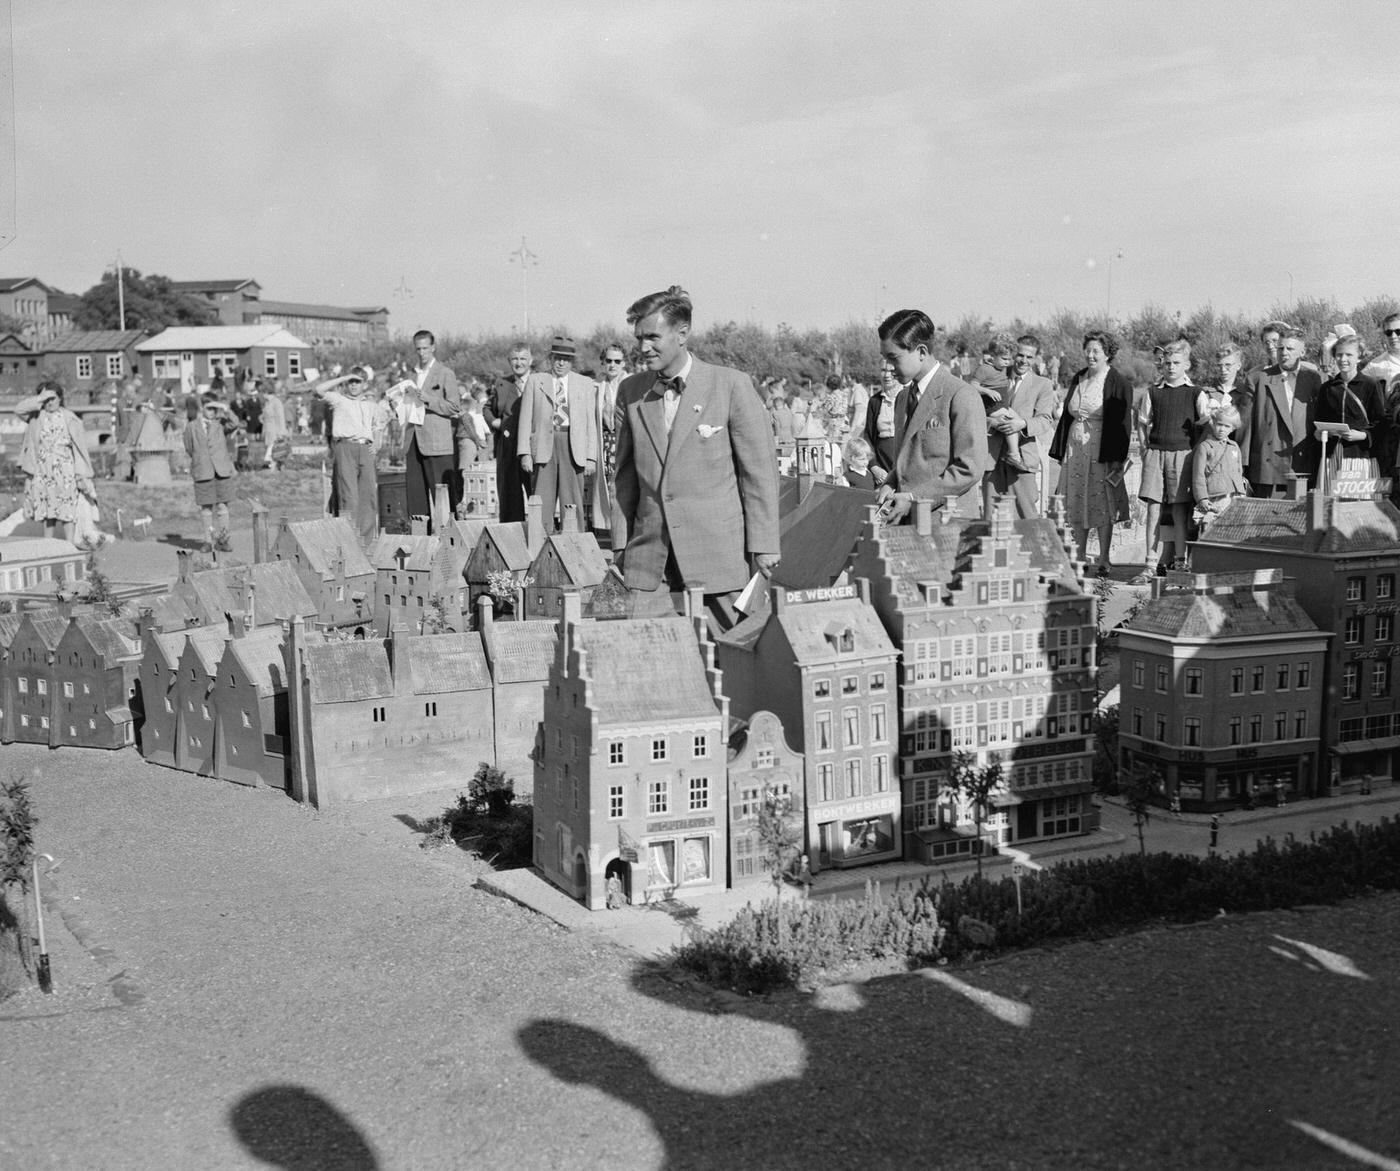 Crown Prince Akihito visits Madurodam Miniature City, The Hague, Netherlands, 28th July 1953.